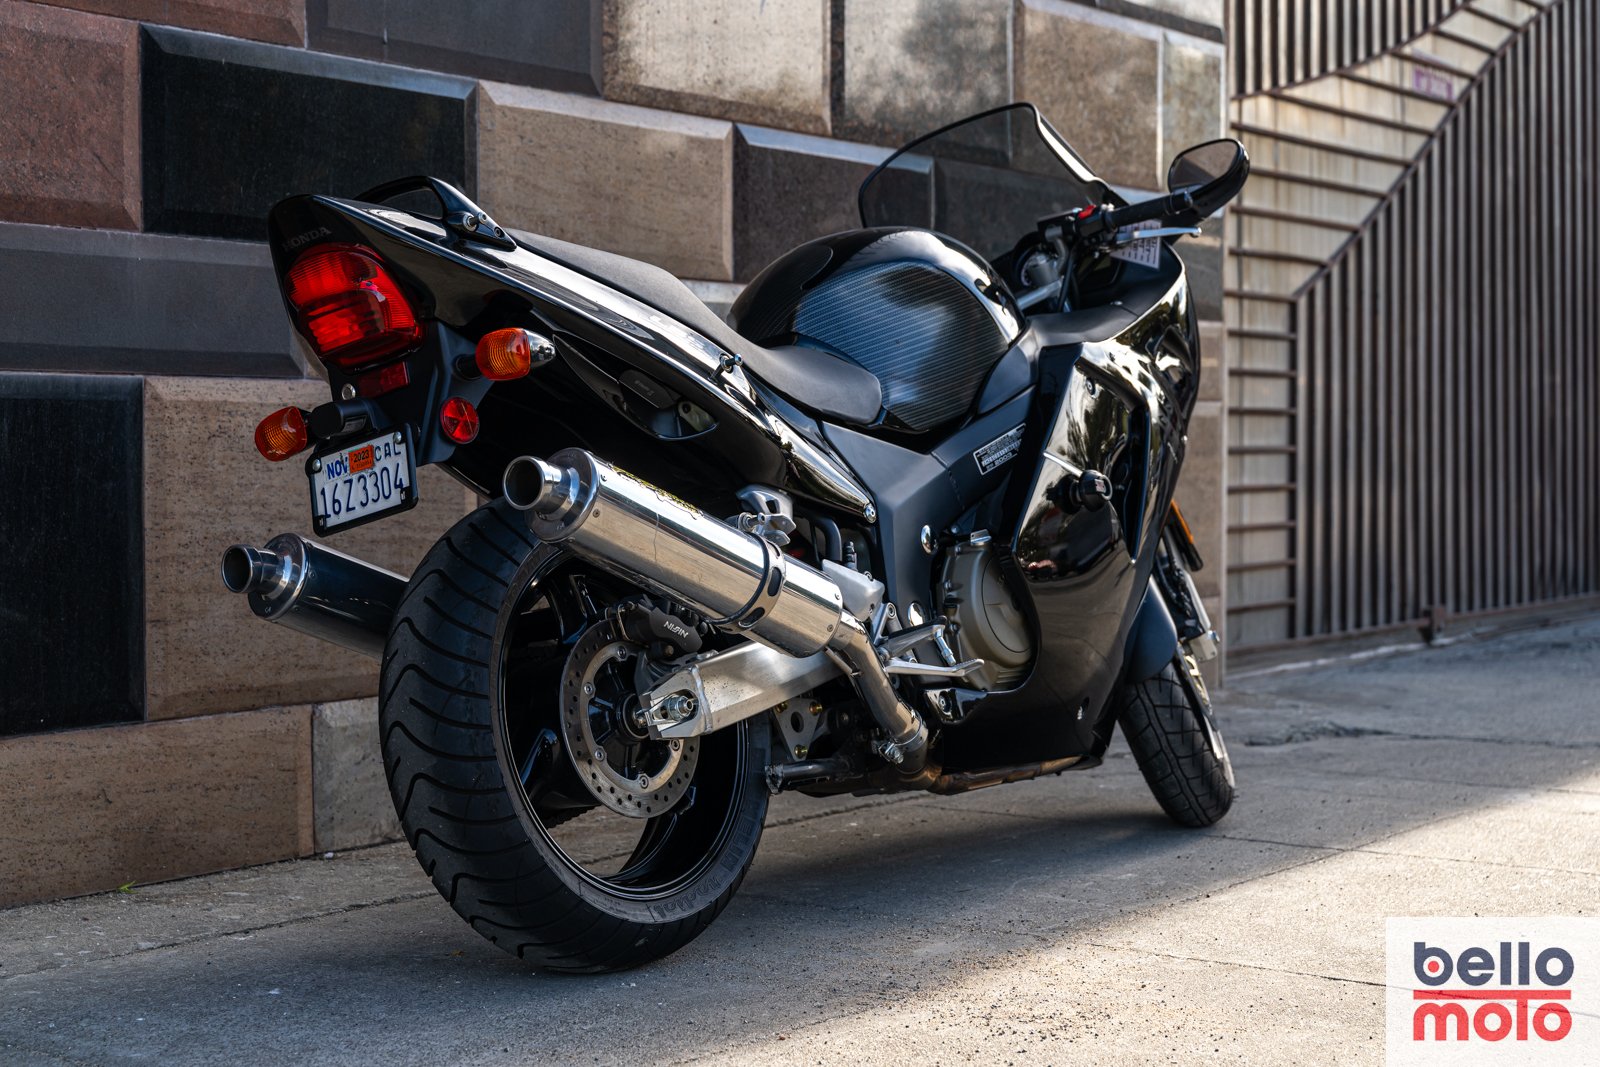 Bello Moto_D306 - 2003 Honda CBR1100XX Blackbird - BLACK_Sharplite_1600px-69.jpg